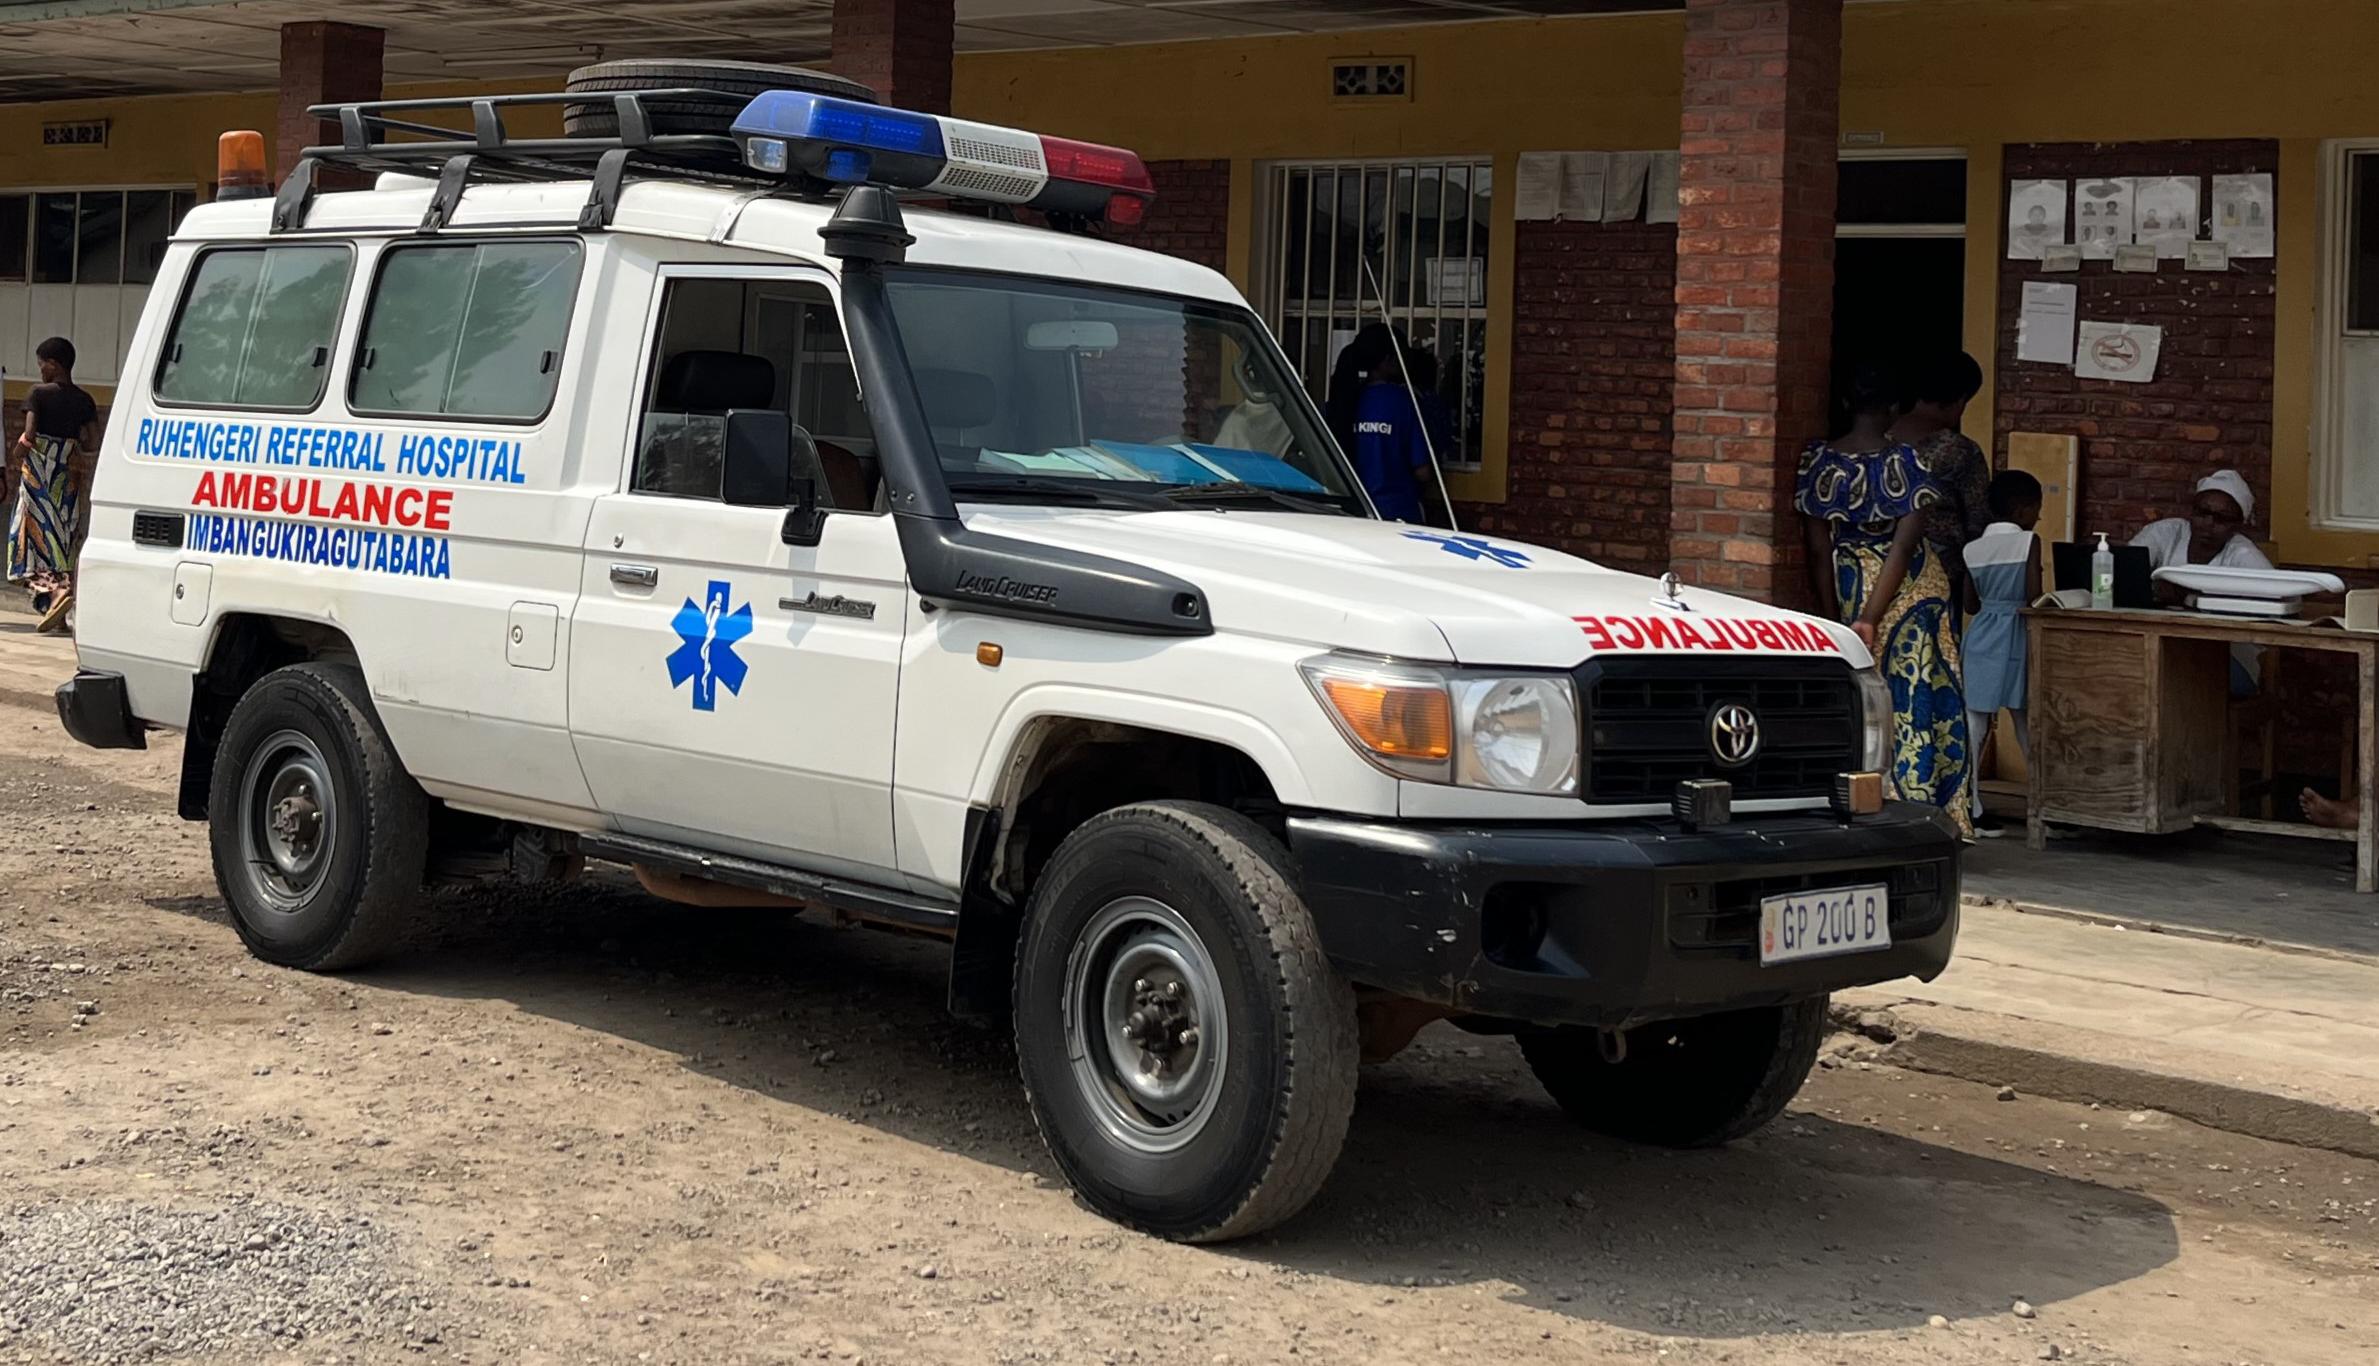 Ambulance in Rwanda parked outside building